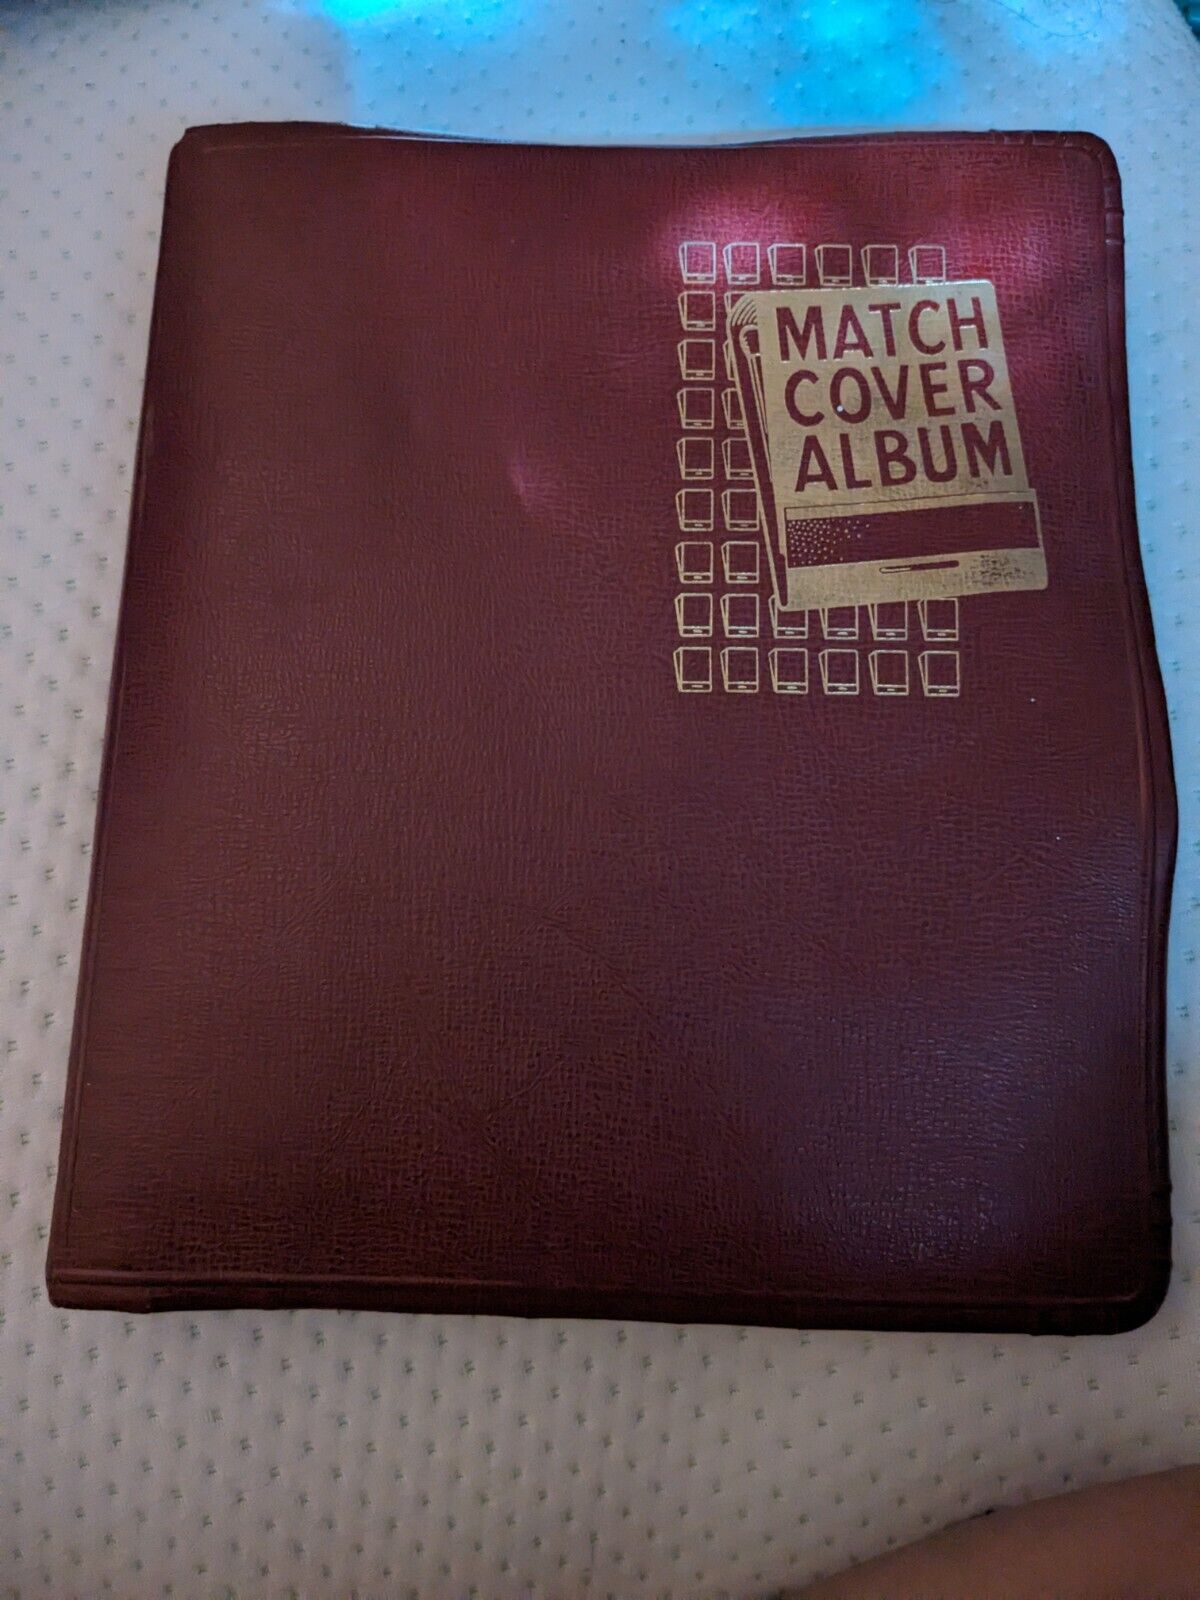 Vintage Match Cover Album 566 Matchbook Covers Travel Souvenir Collection Book